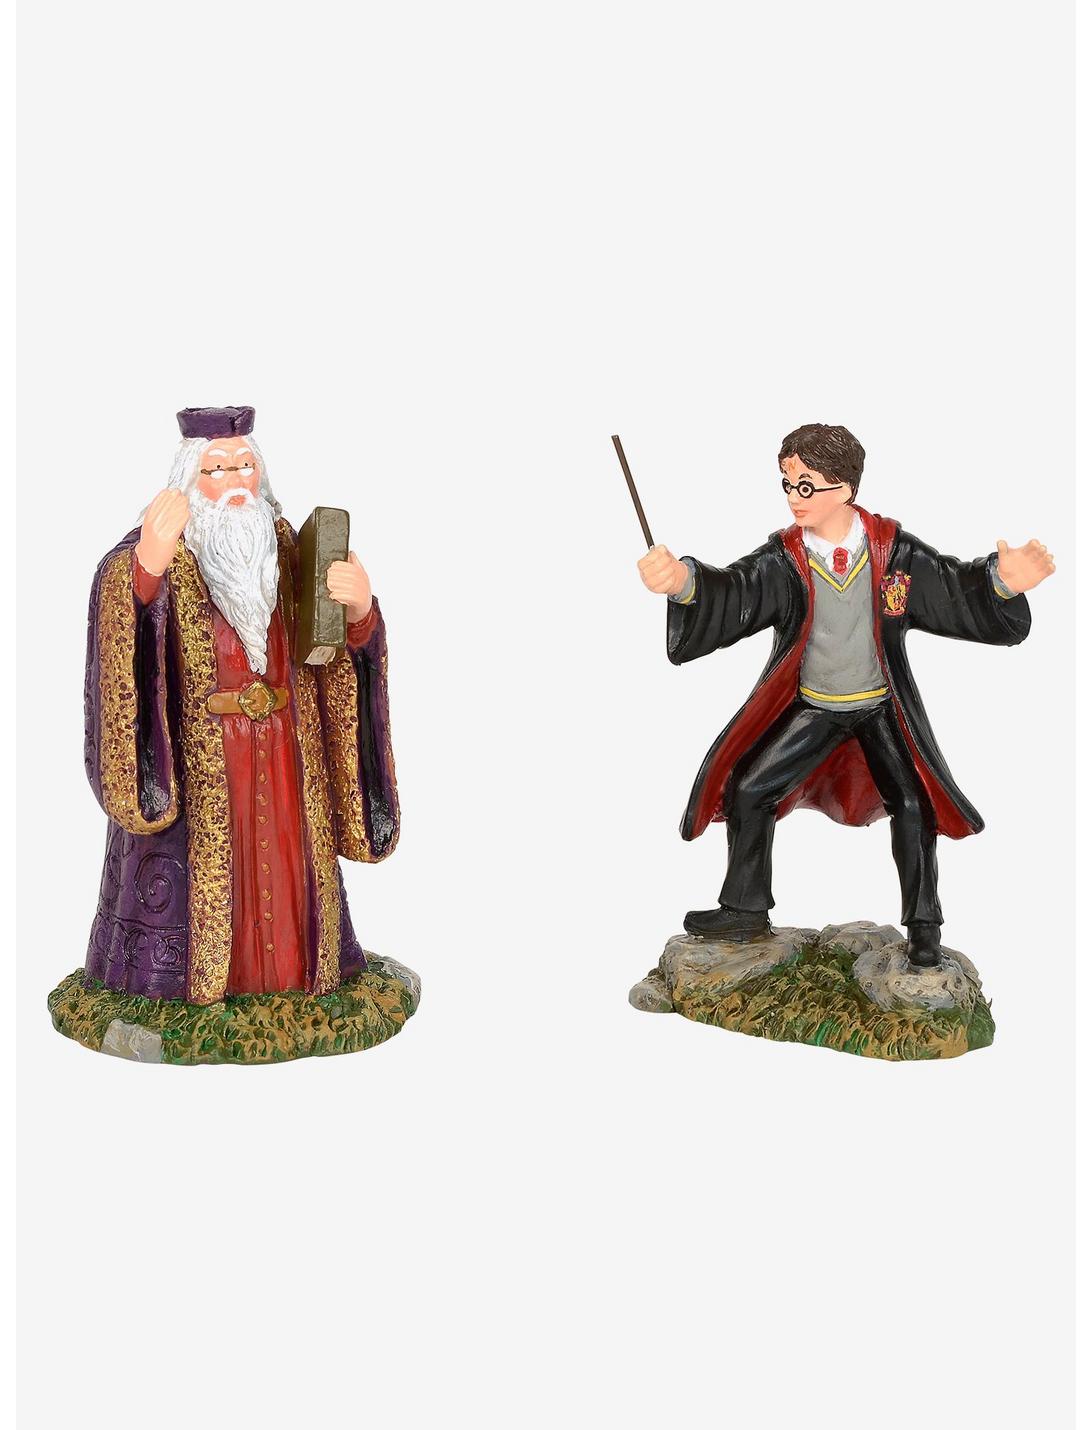 Harry Potter Harry & Dumbledore Collectible Figure Set, , hi-res